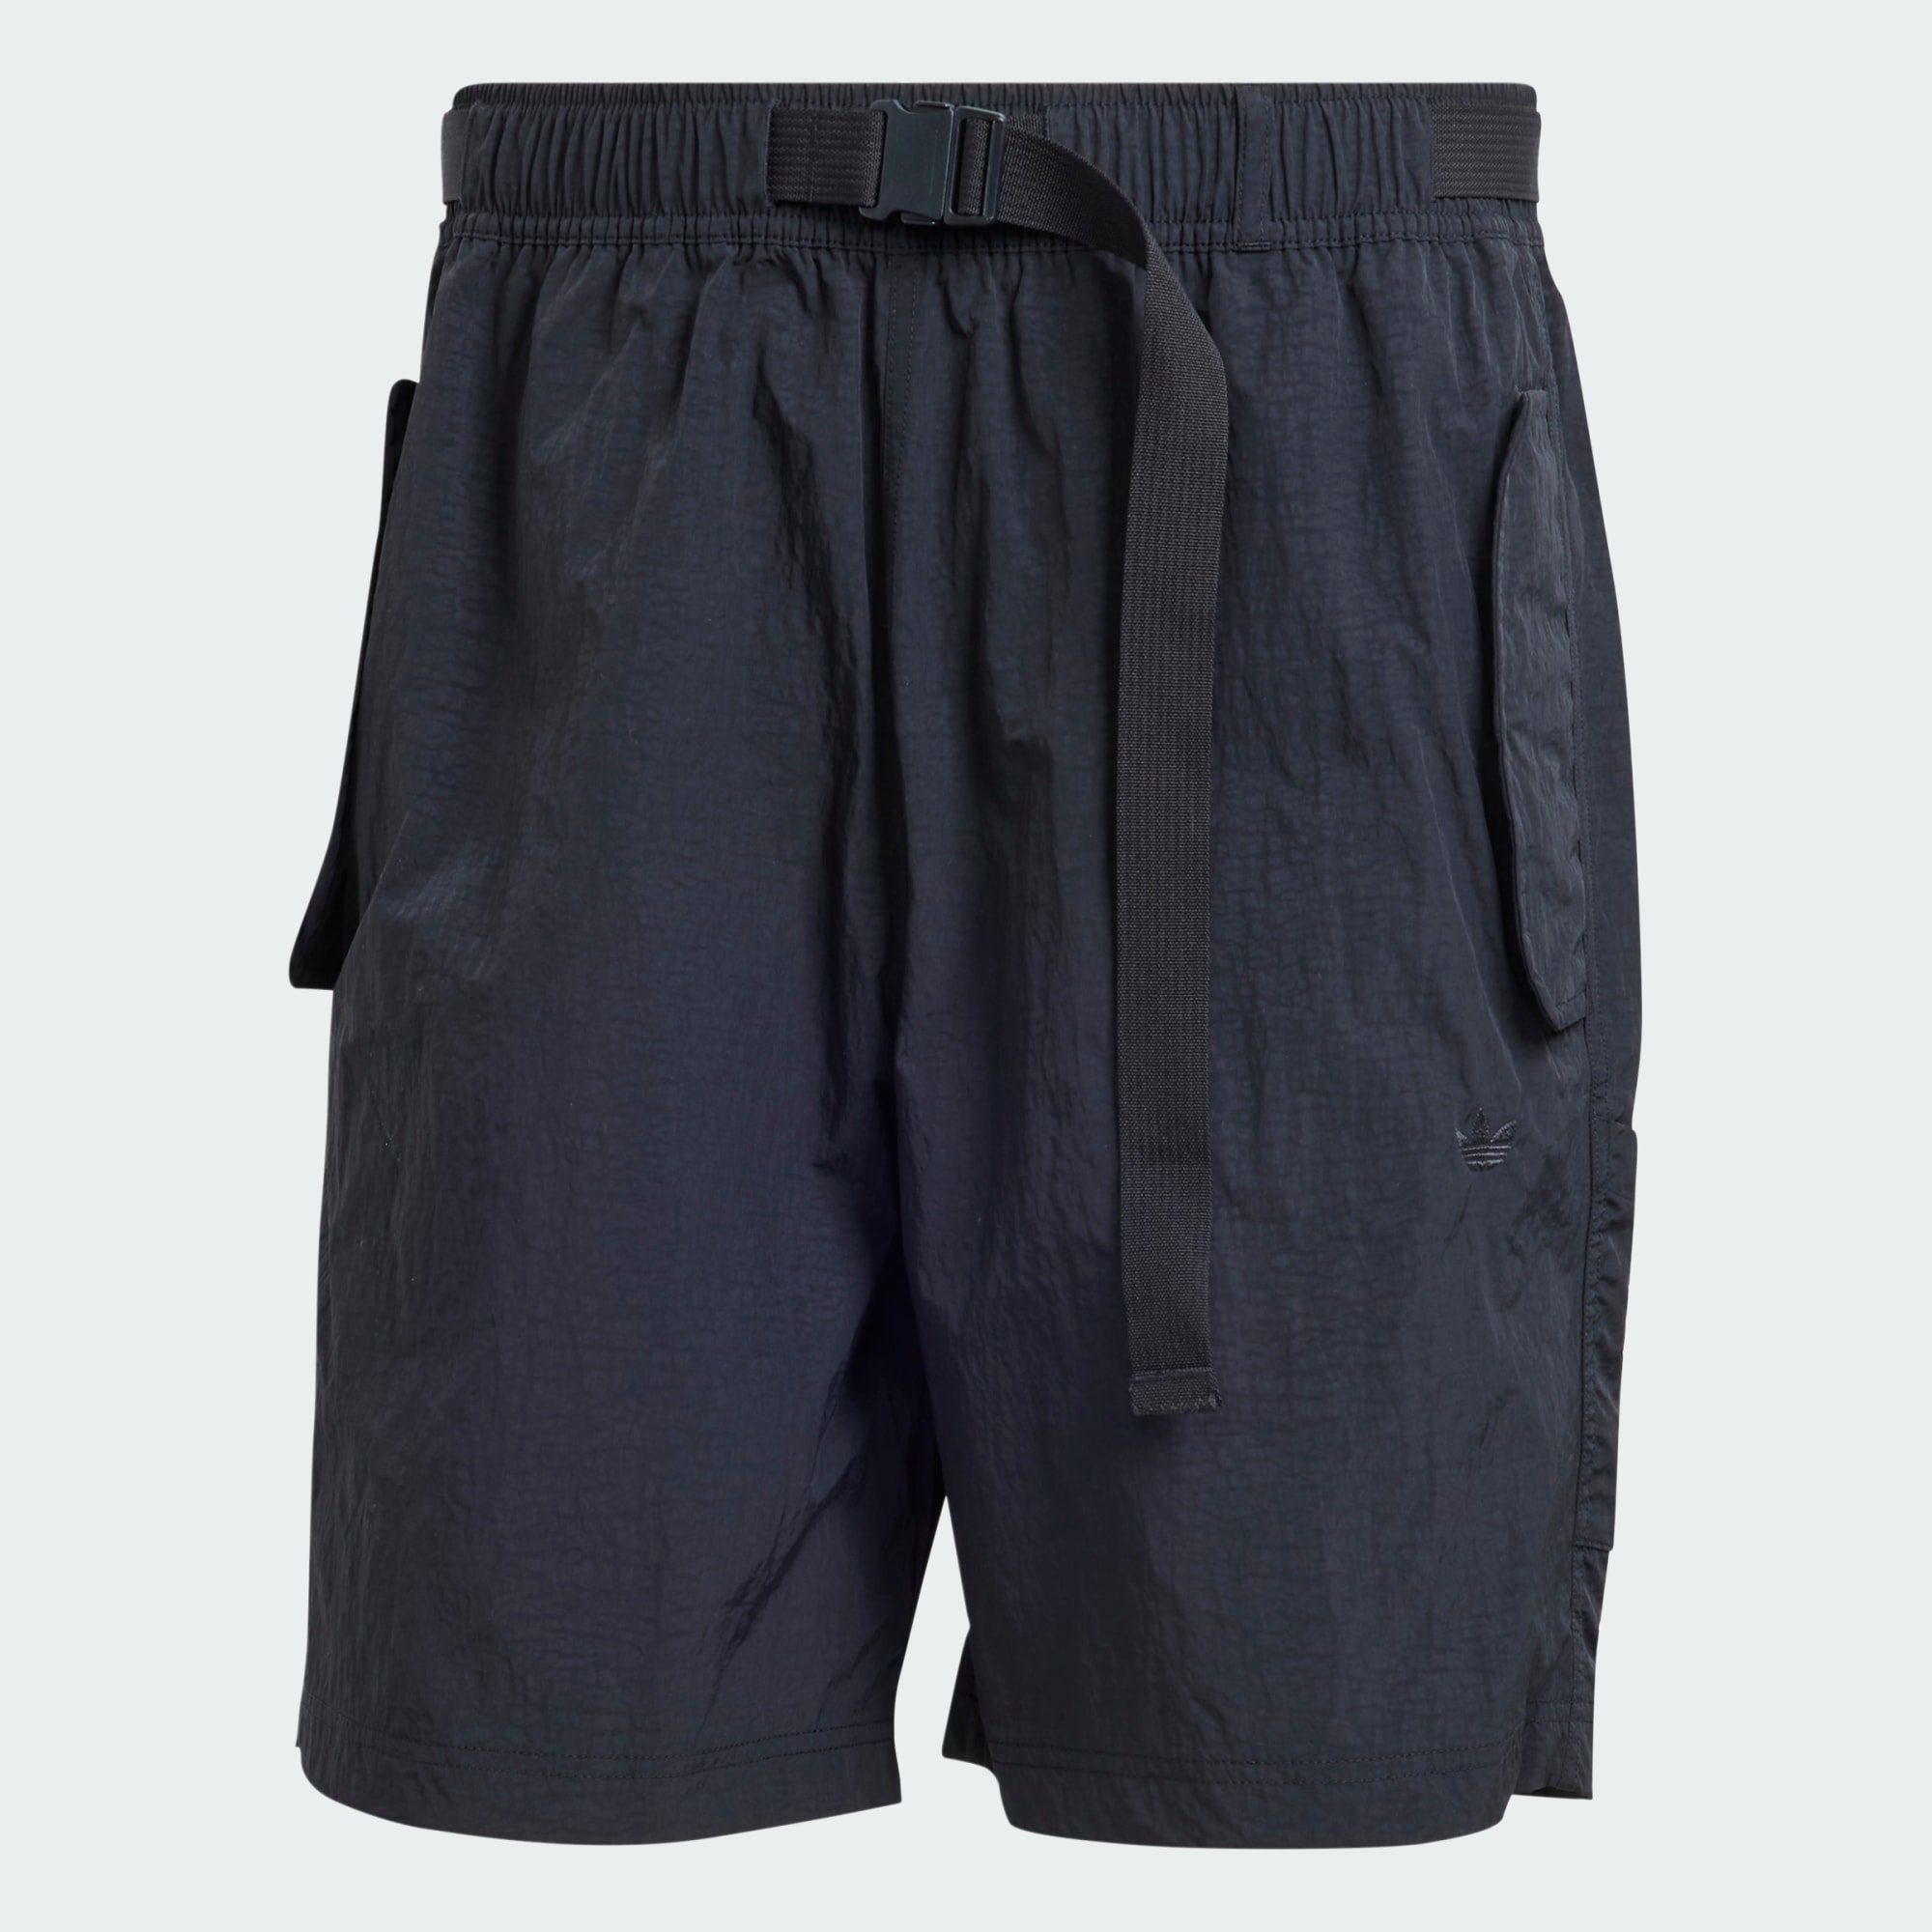 CARGOSHORTS – GENDERNEUTRAL Black ADIDAS adidas ADVENTURE Originals Shorts